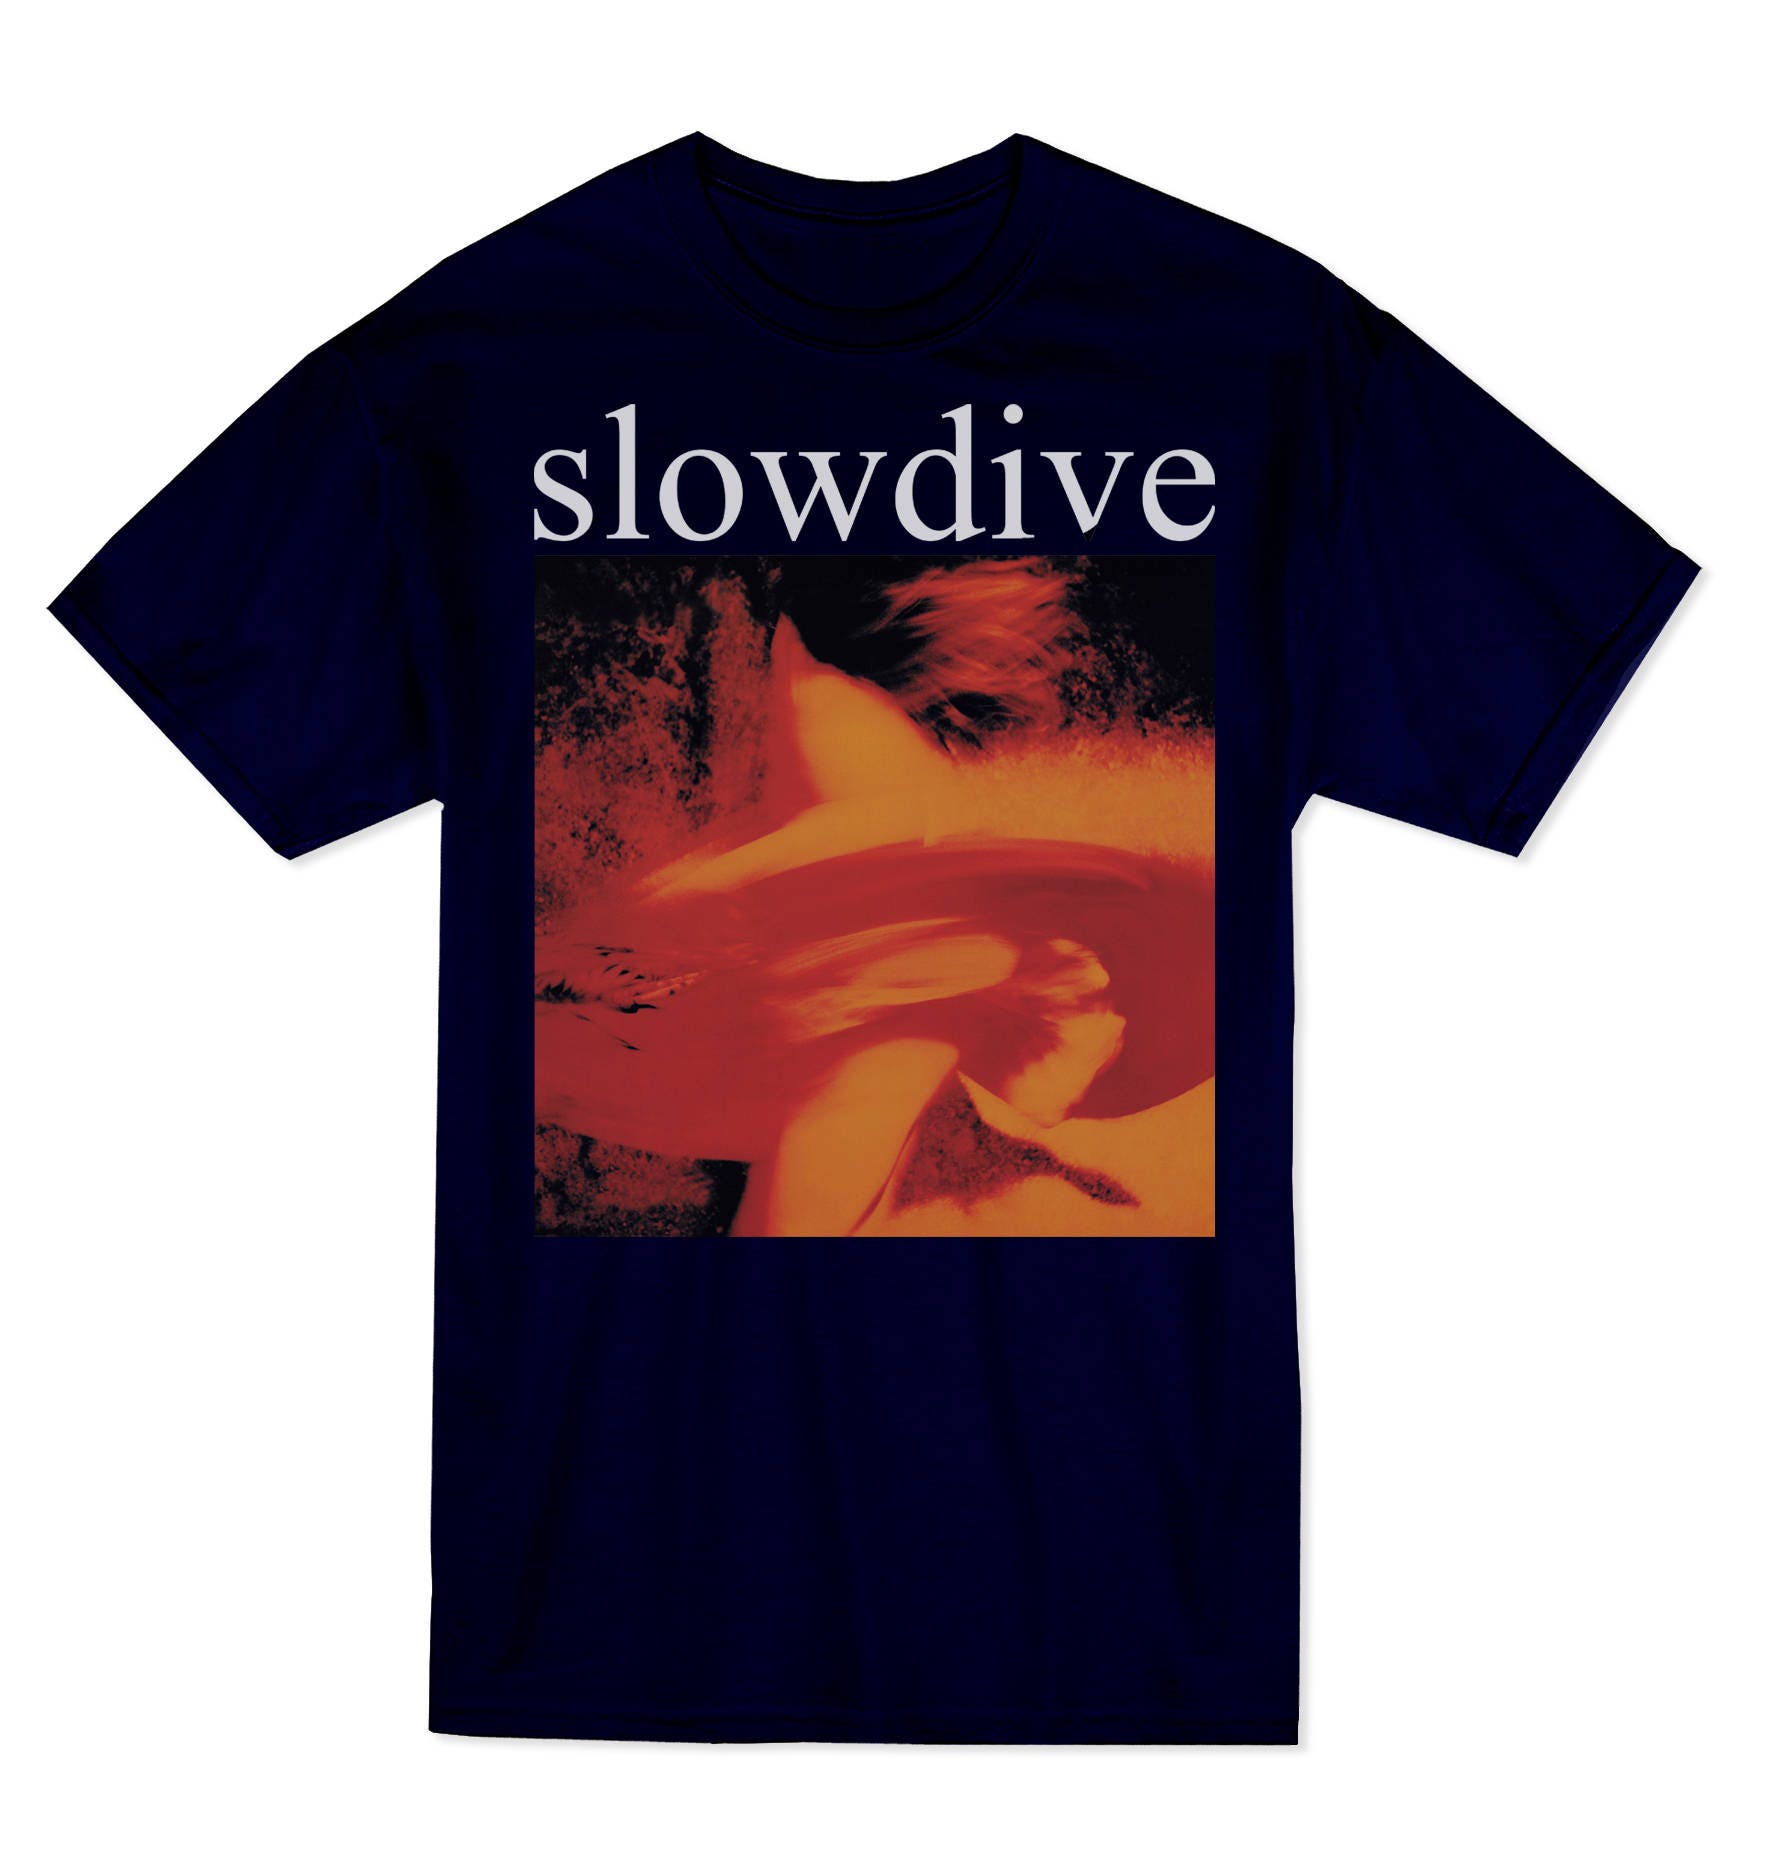 Slowdive t-shirt just for a day souvlaki shoegaze my bloody